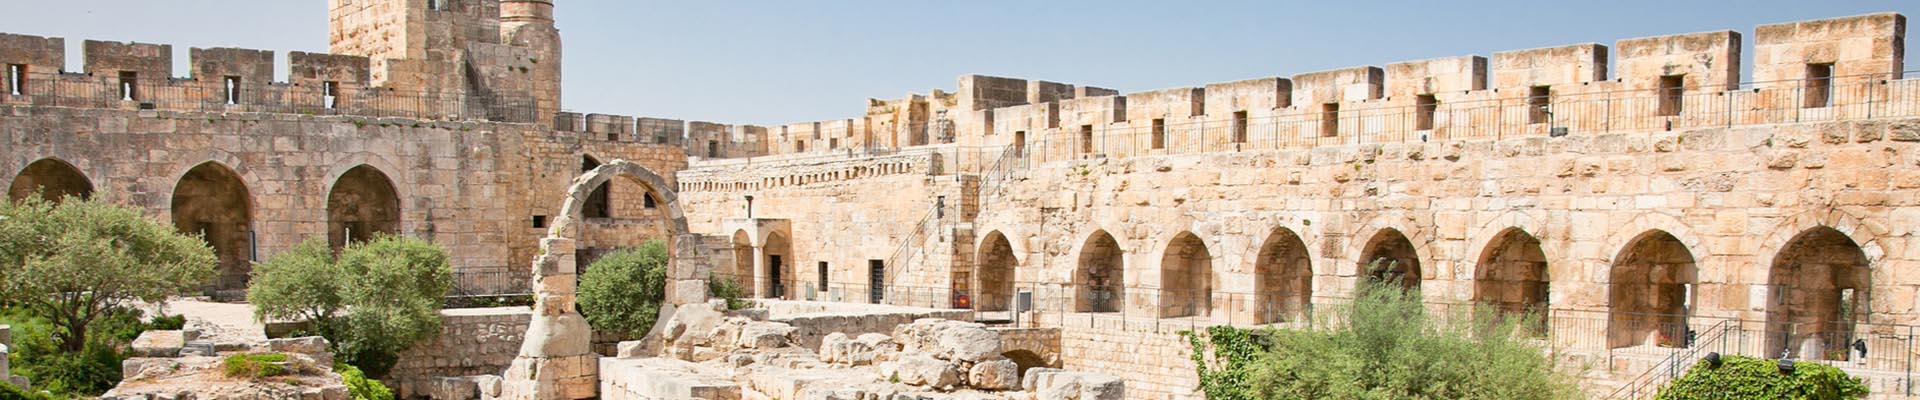 10 Day Private Israel Tour - Jerusalem Focus